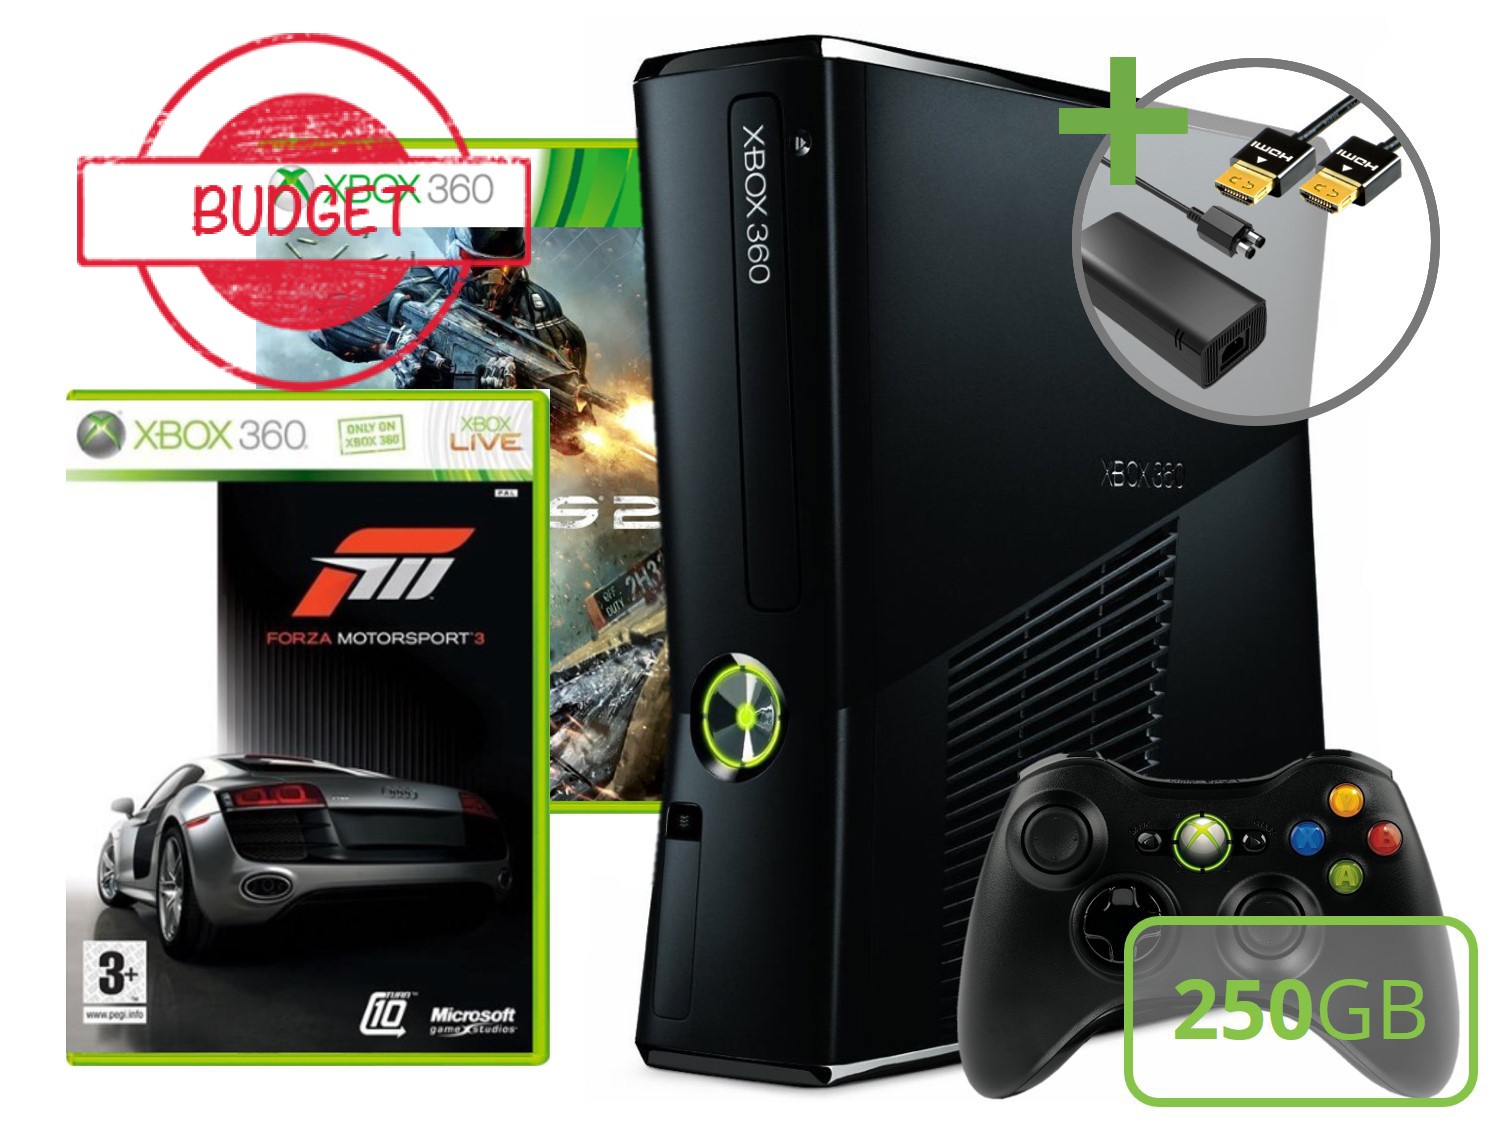 Microsoft Xbox 360 Slim Starter Pack - Forza 3 and Crisis 2 Edition - Budget Kopen | Xbox 360 Hardware